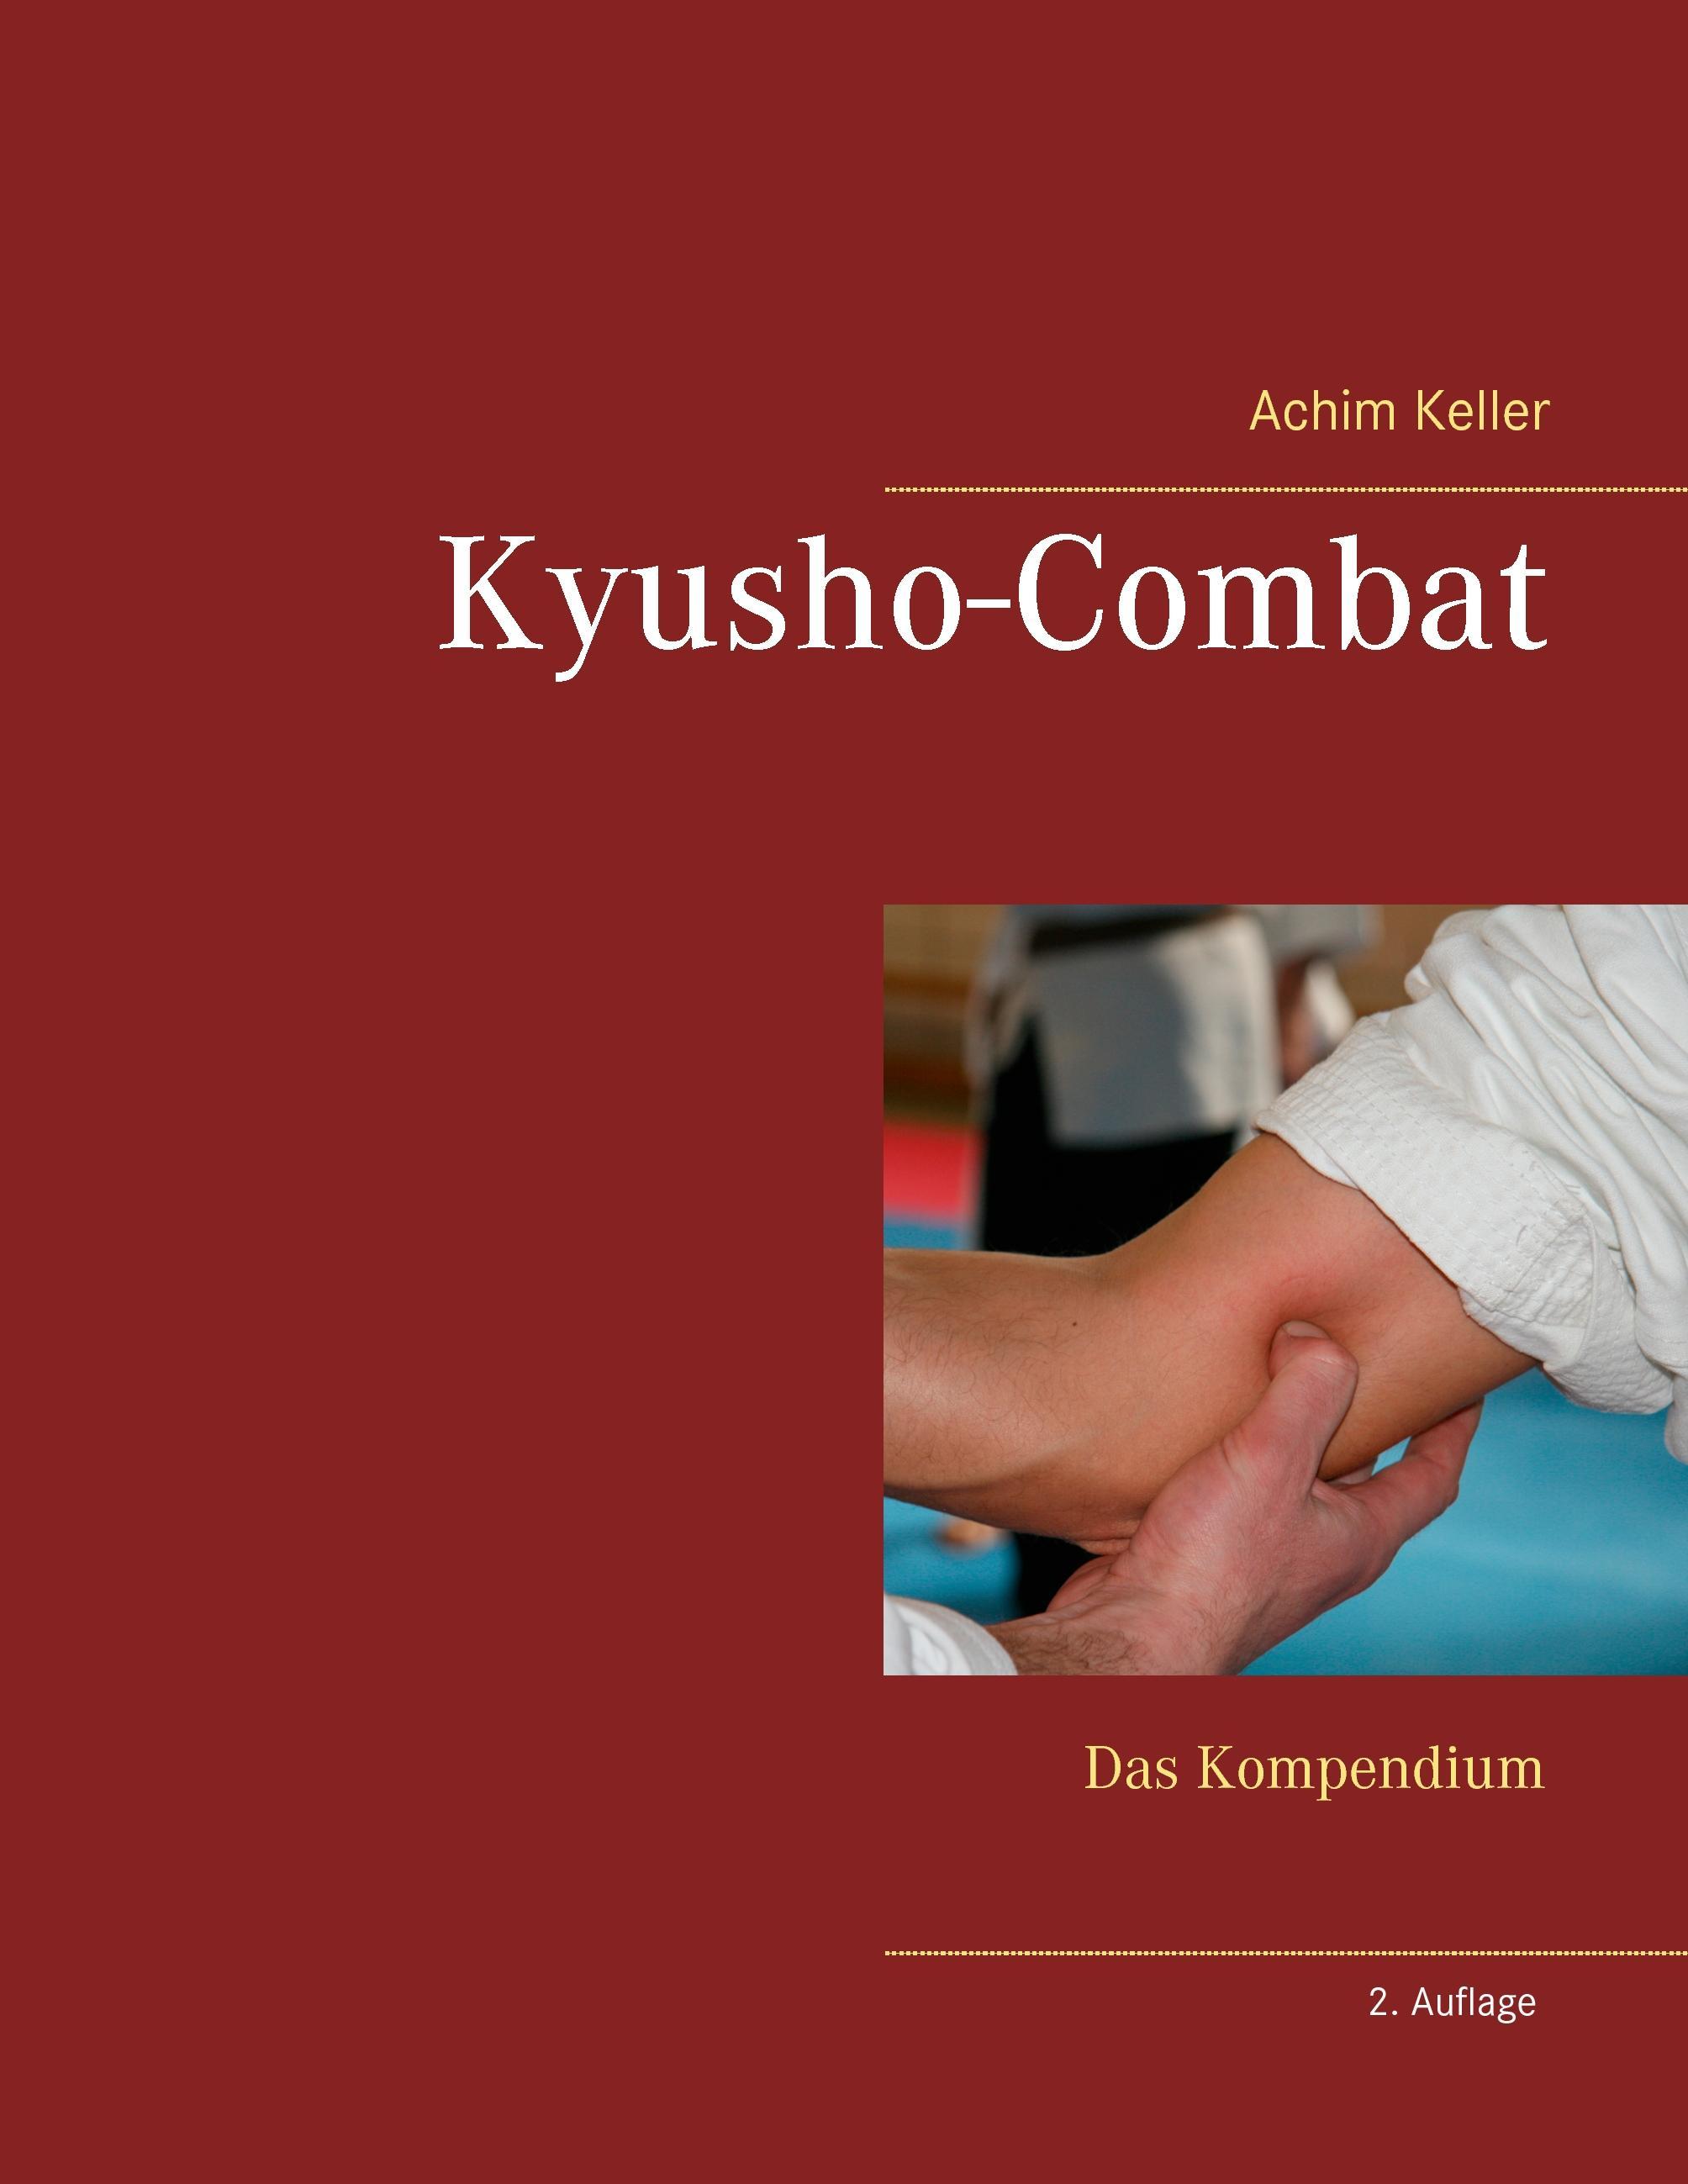 Kyusho-Combat Das Kompendium